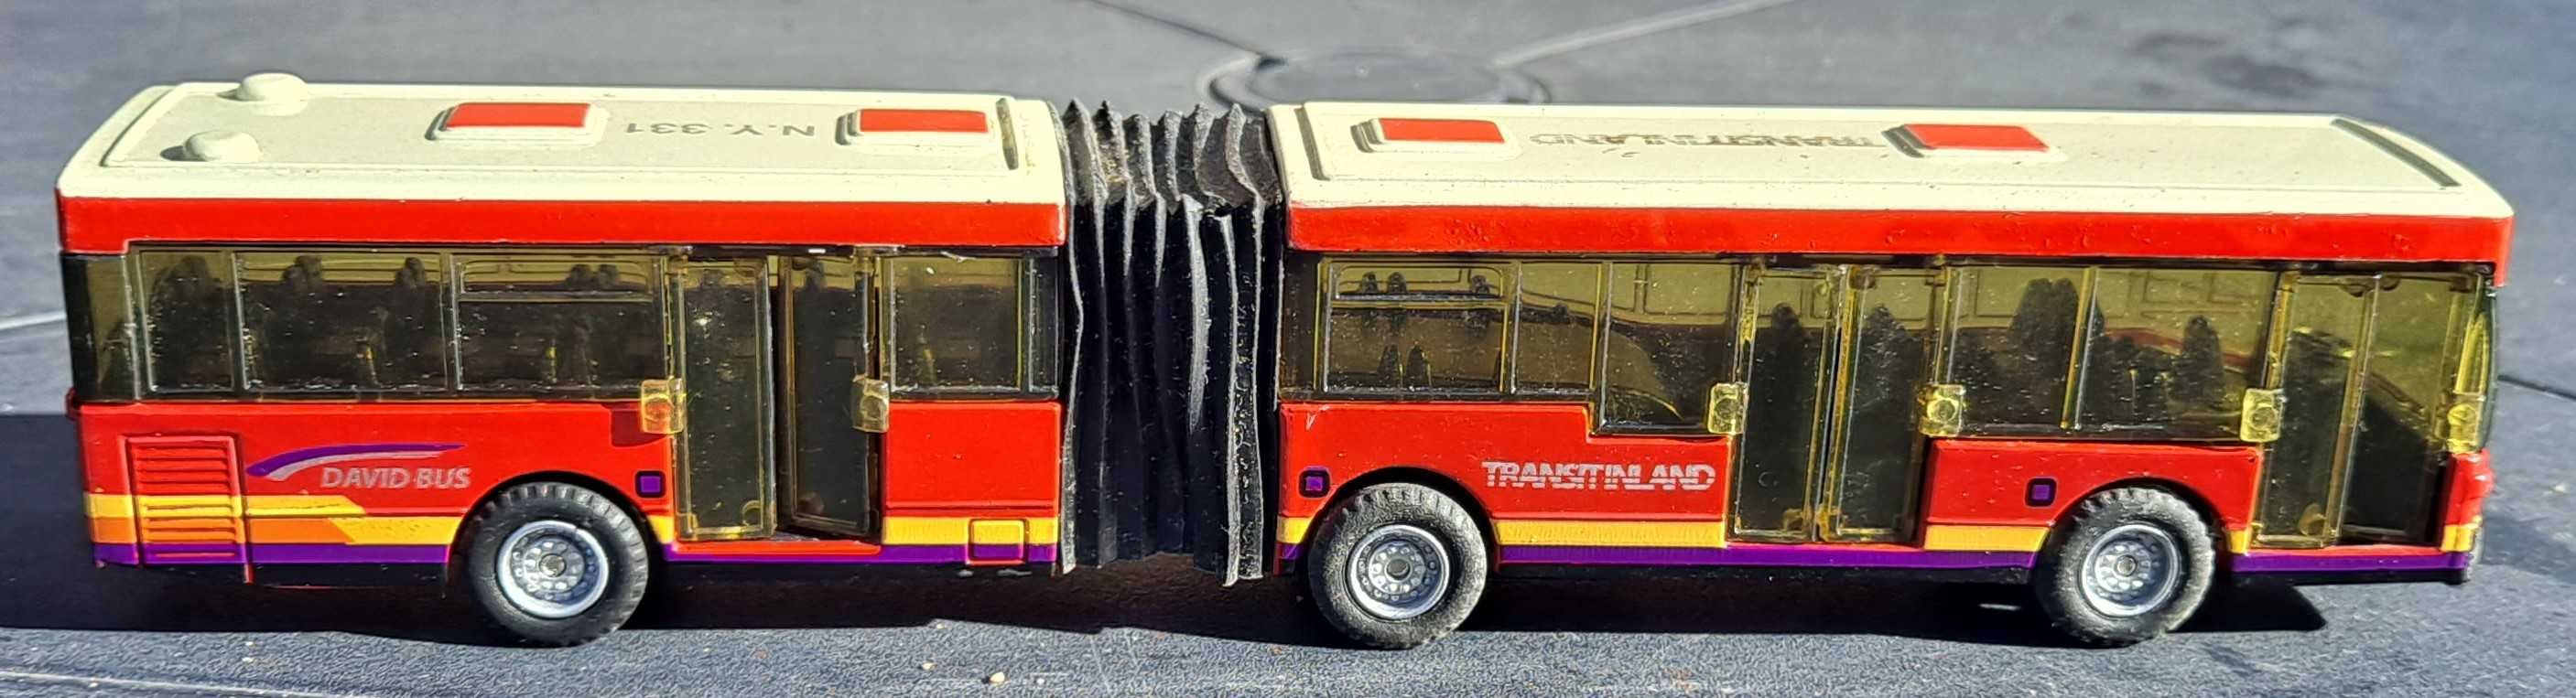 autobus zabawka model